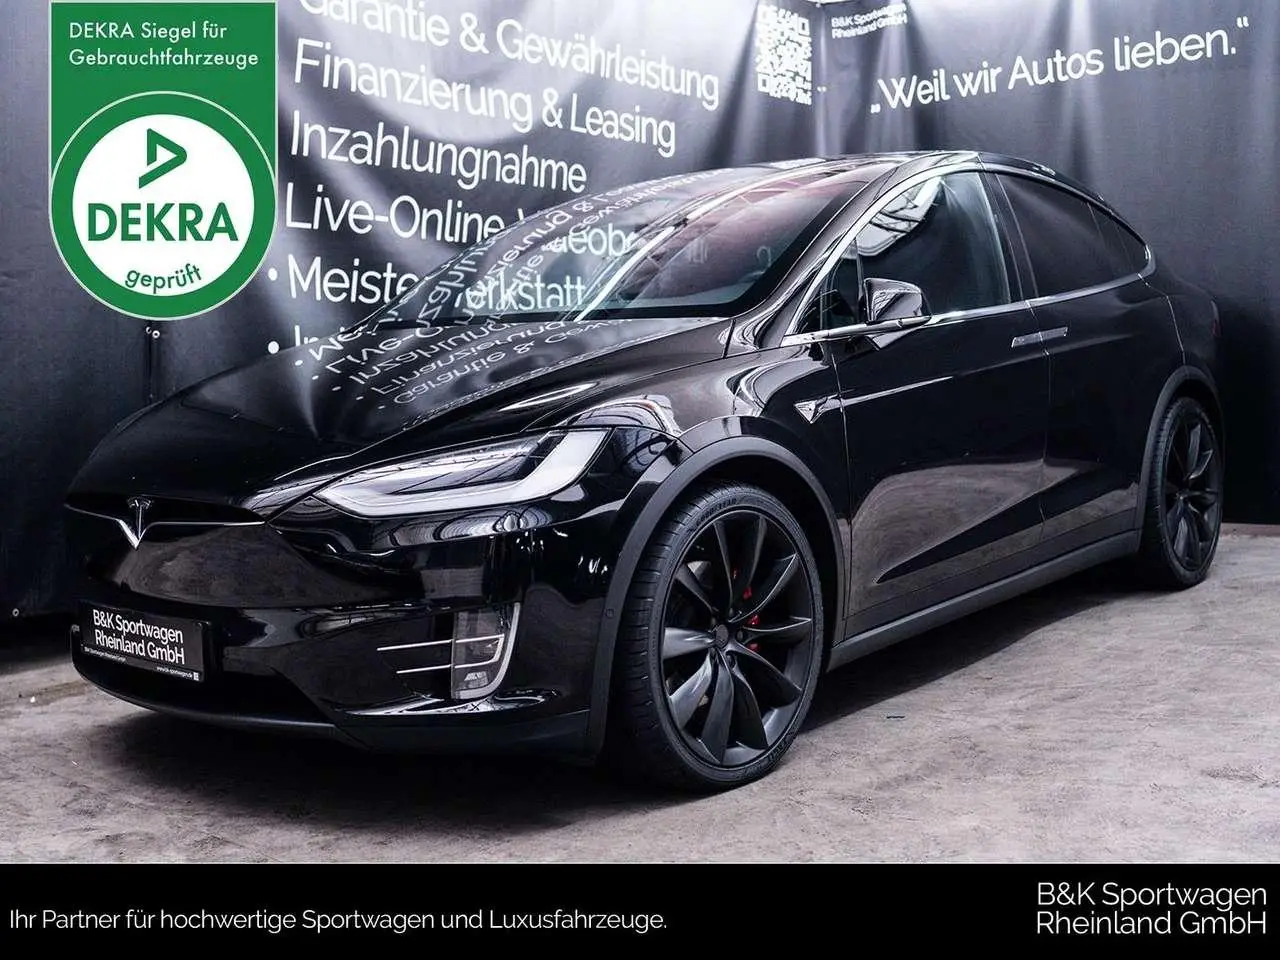 Photo 1 : Tesla Model X 2020 Electric